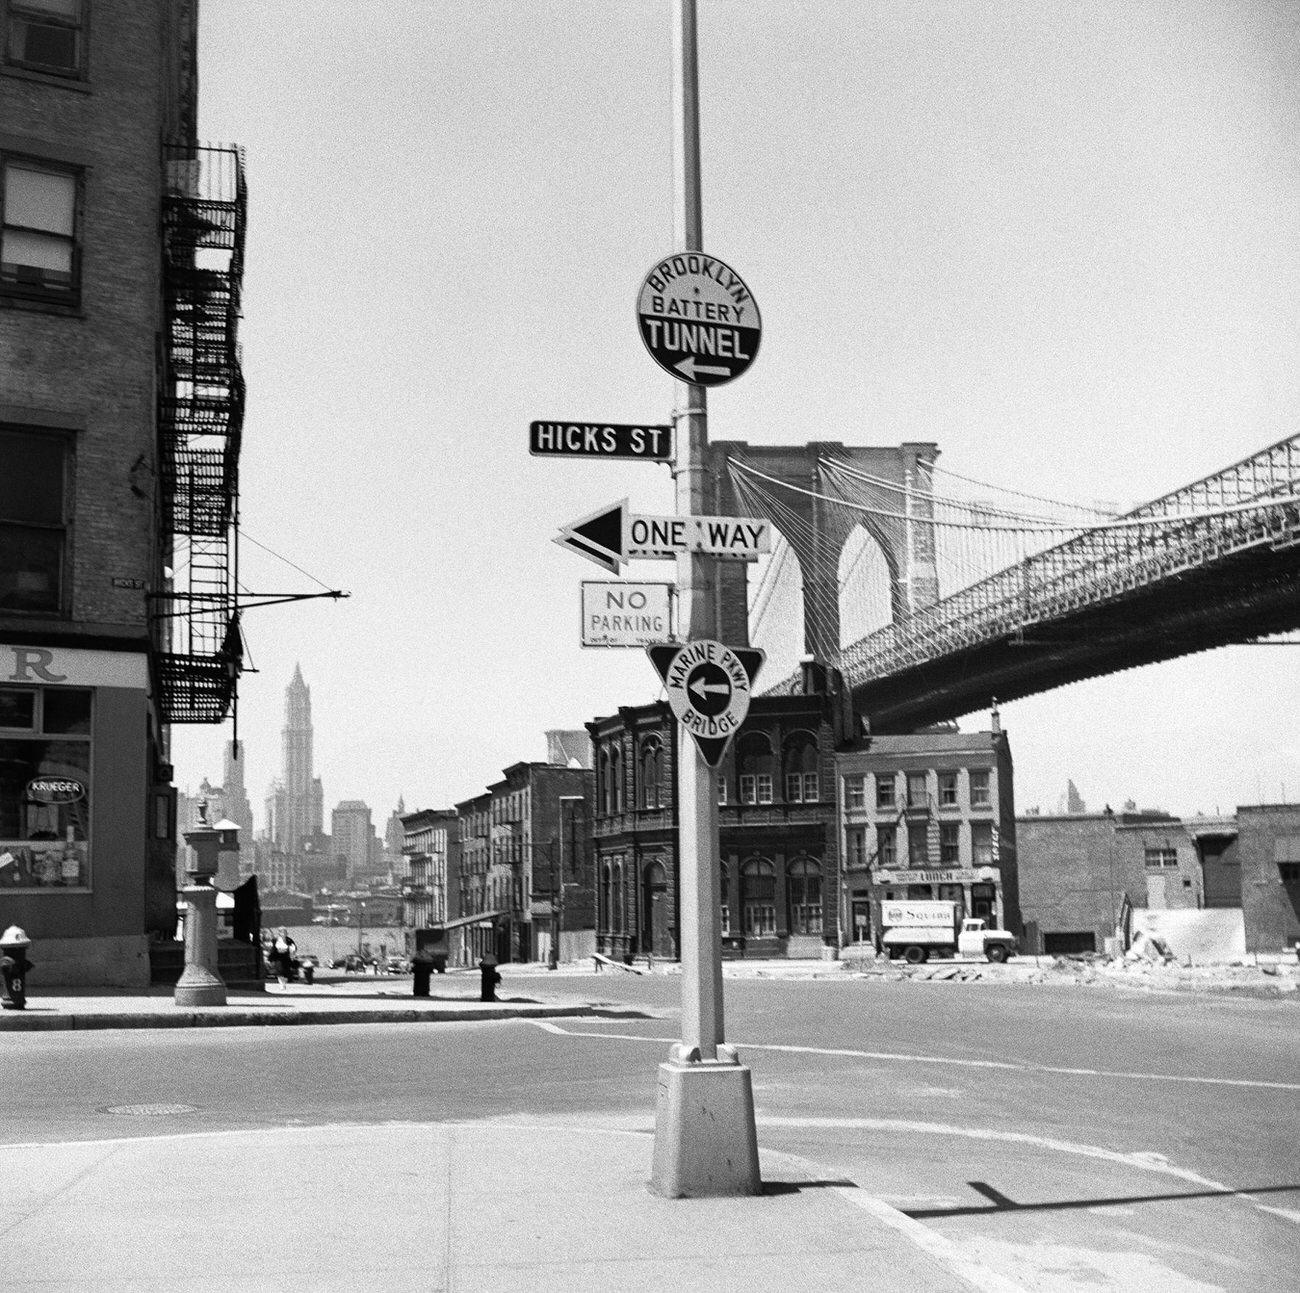 Hicks Street In Brooklyn Heights, 1958.